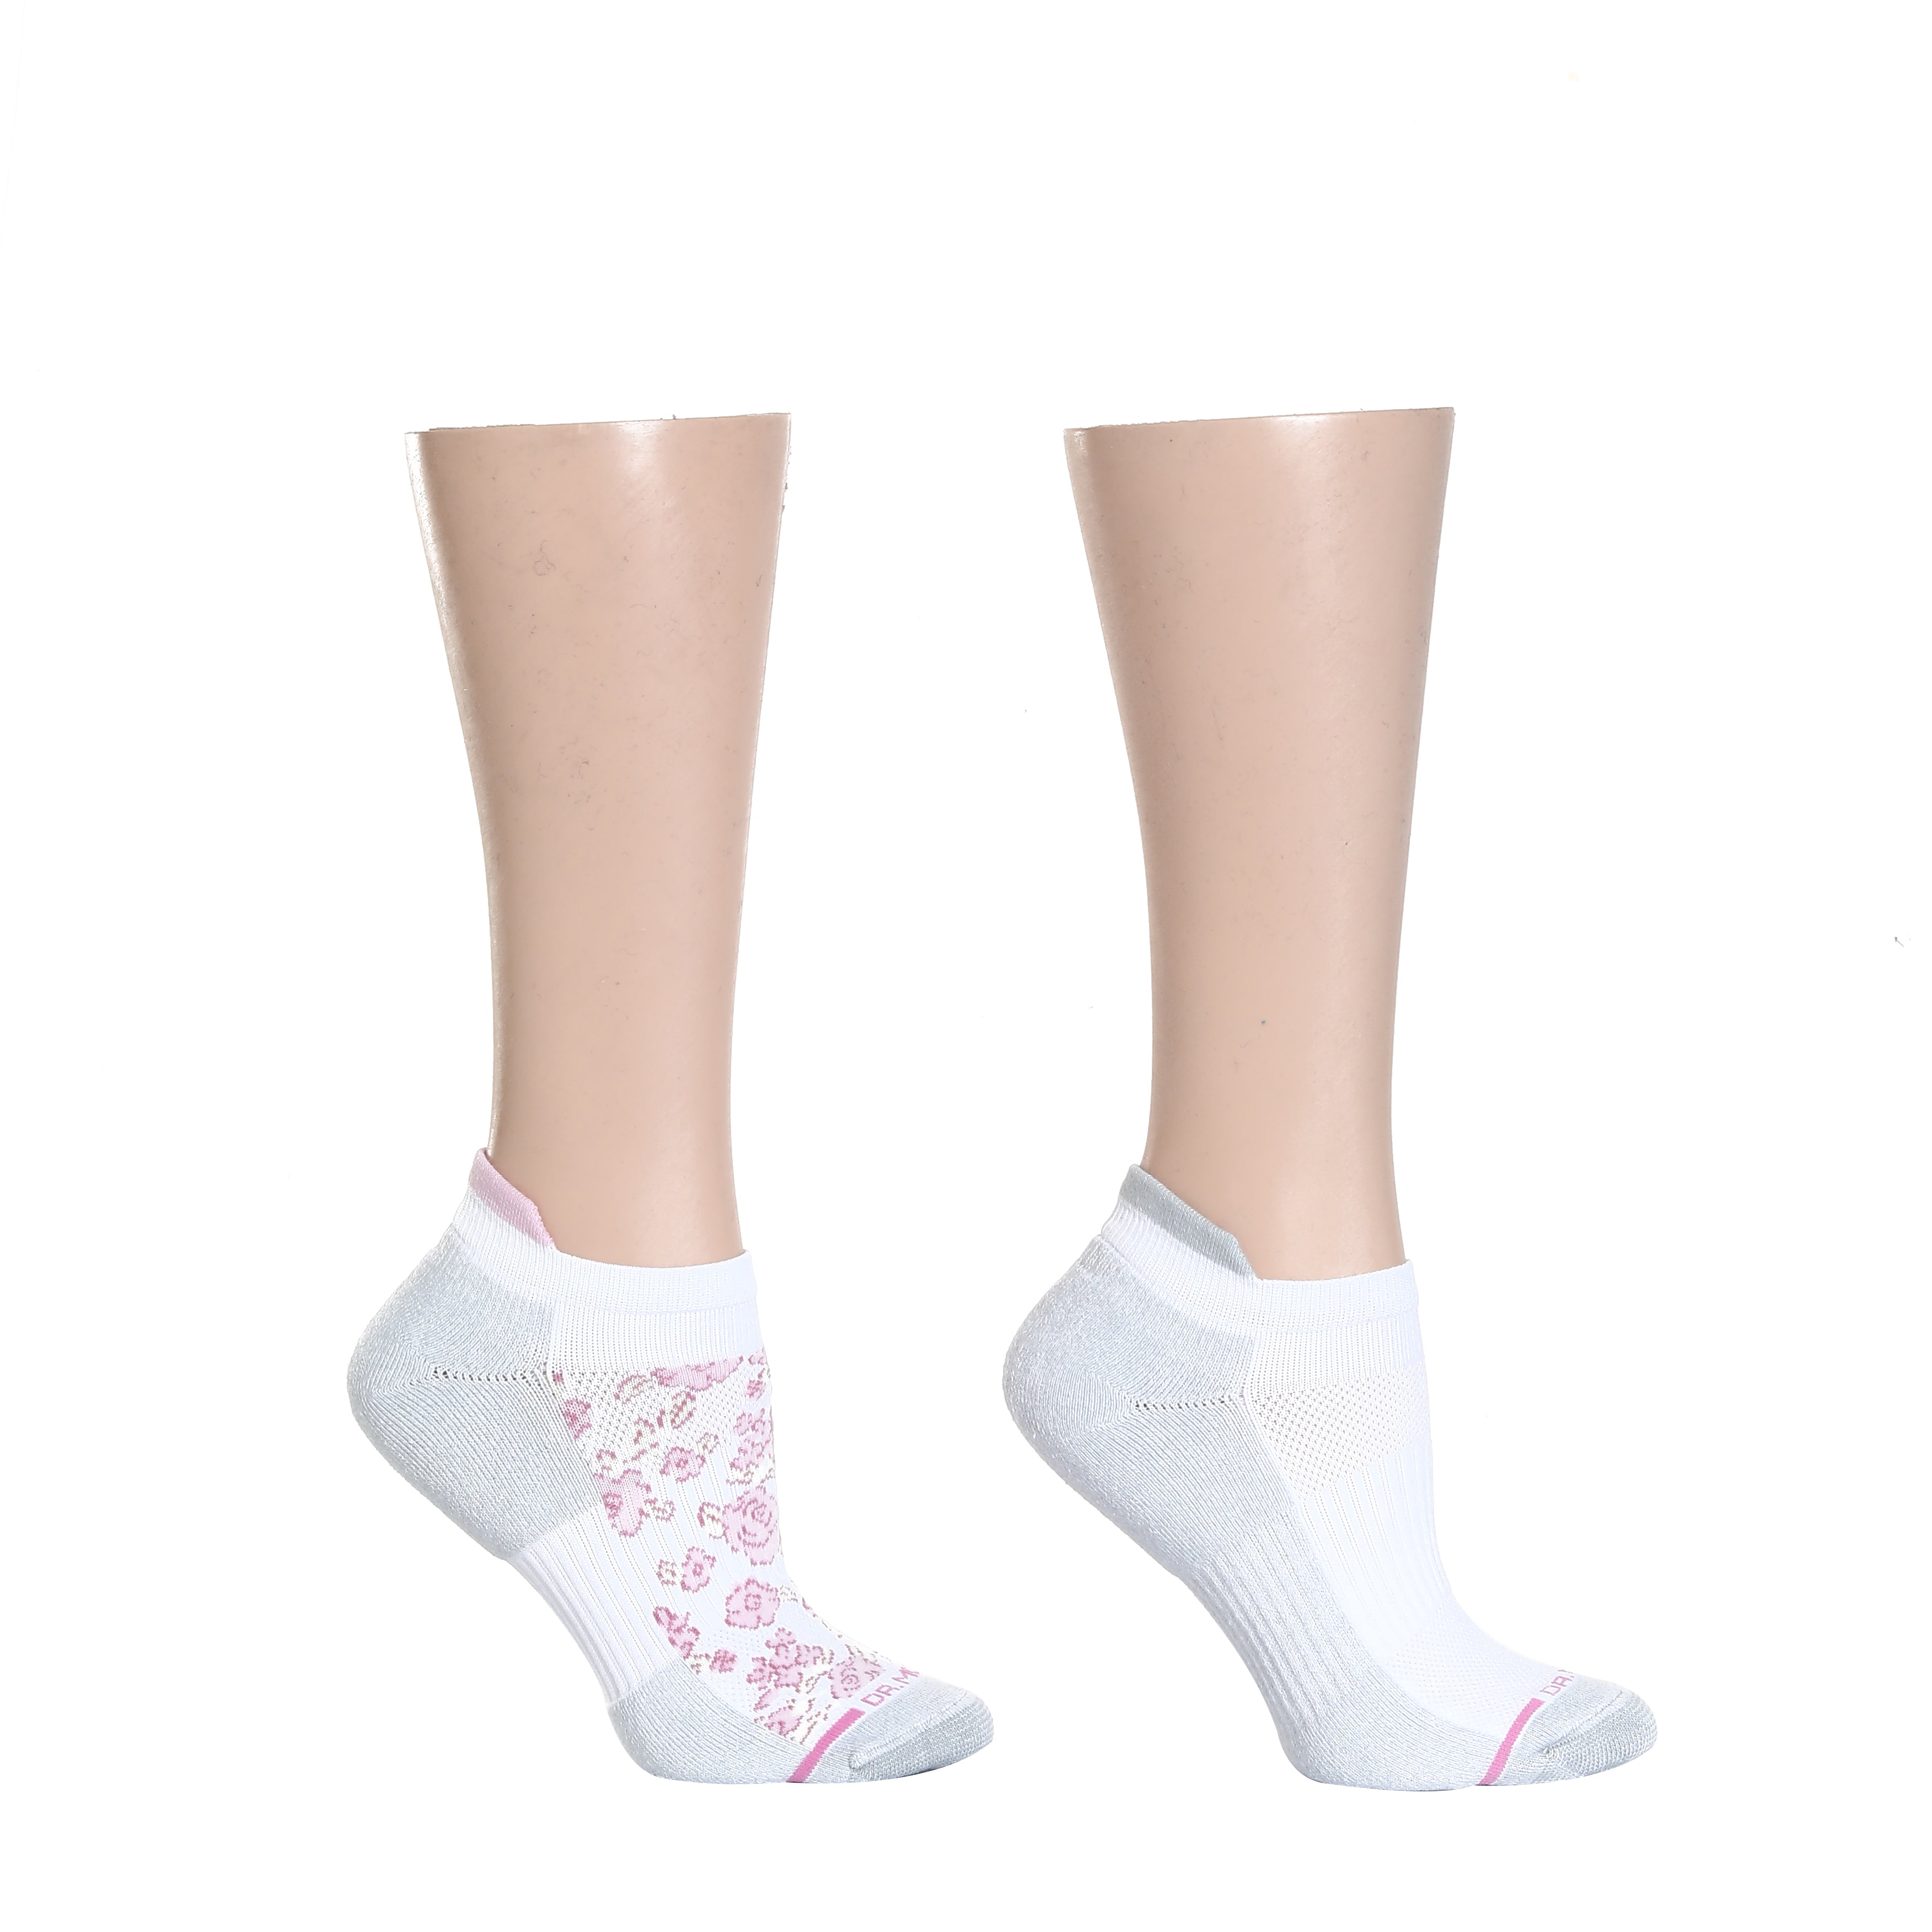 Rose | Ankle Compression Socks For Women